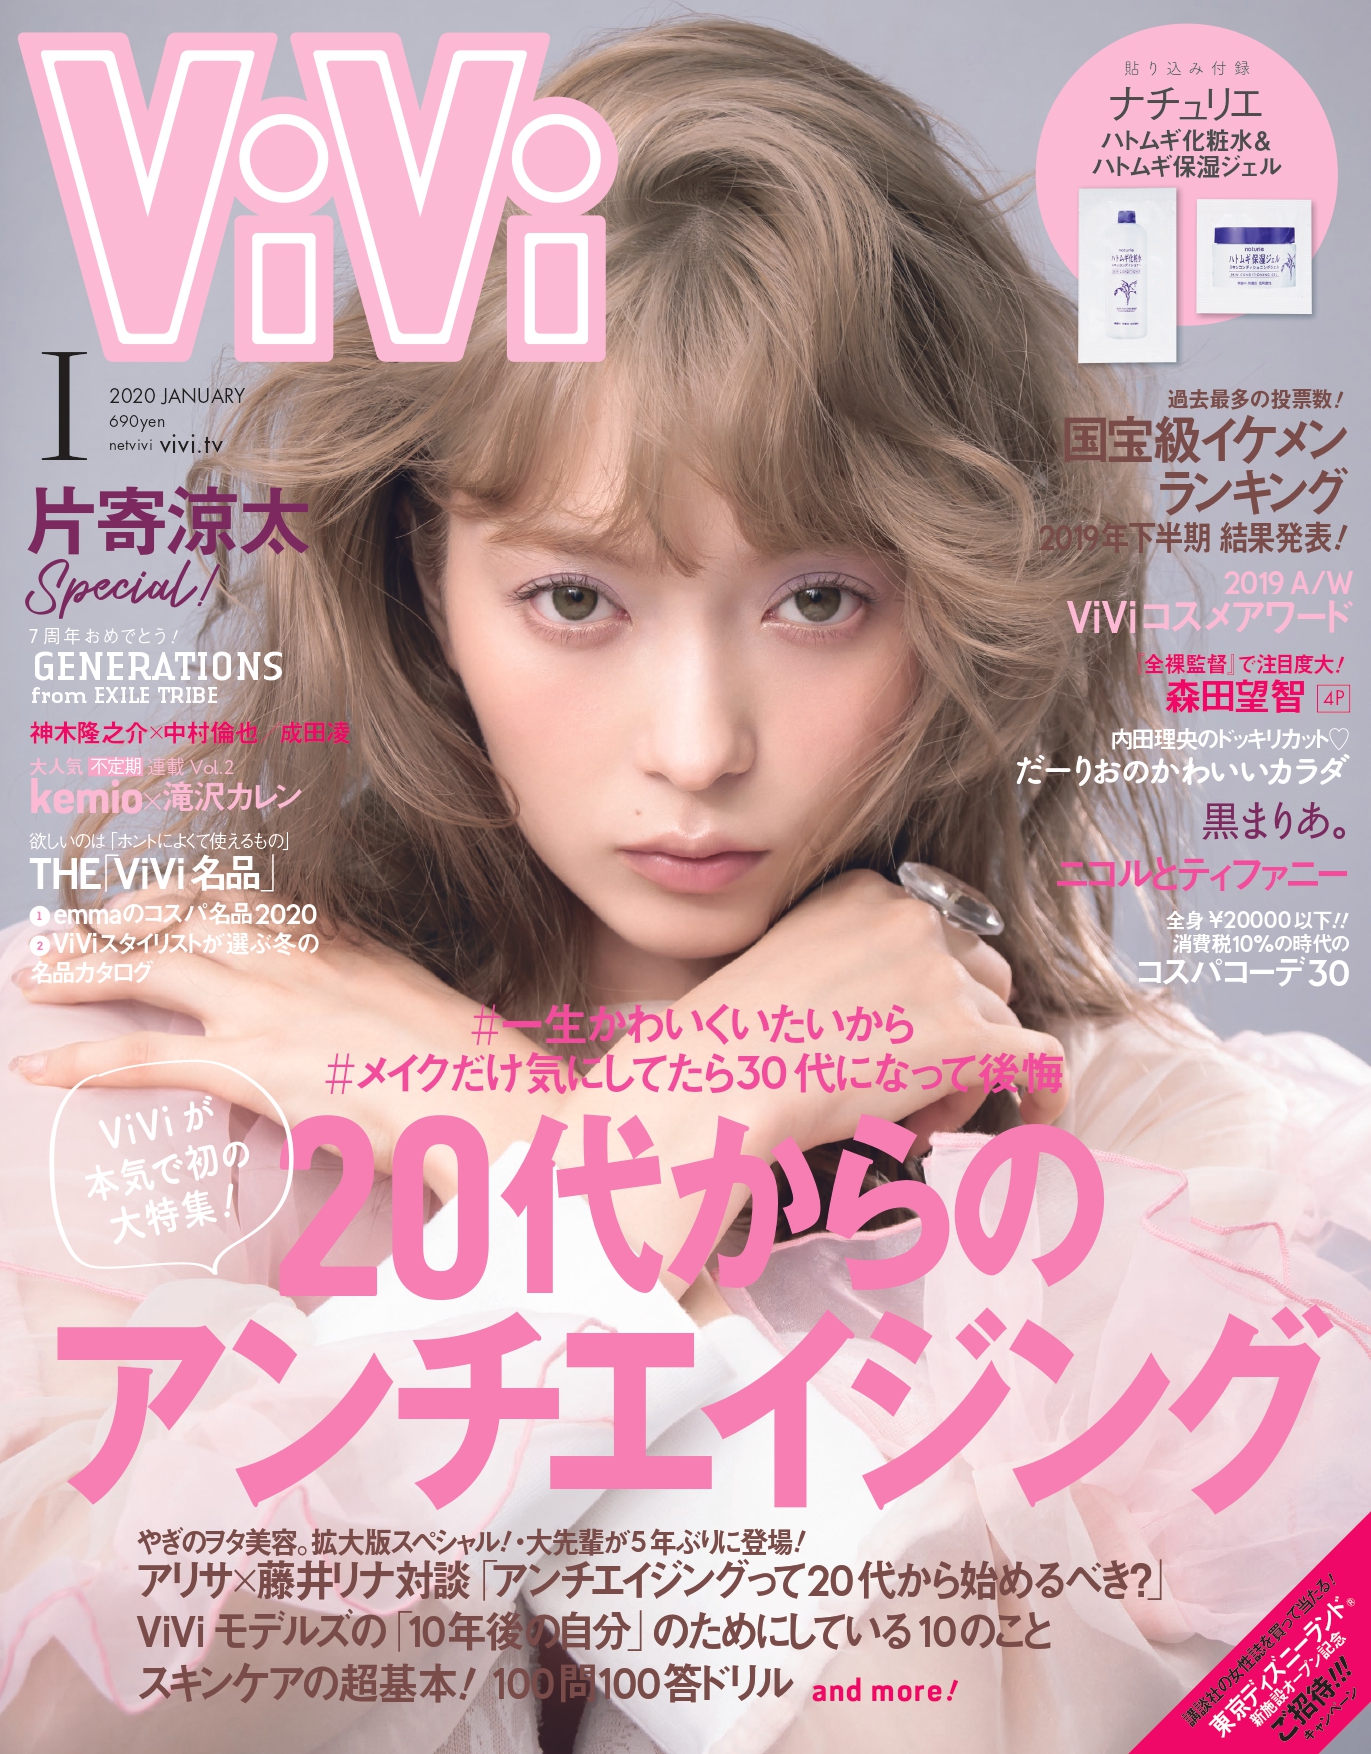 Vivi1月号 通常版は八木アリサ 特別版は片寄涼太が表紙の2冊同時発売